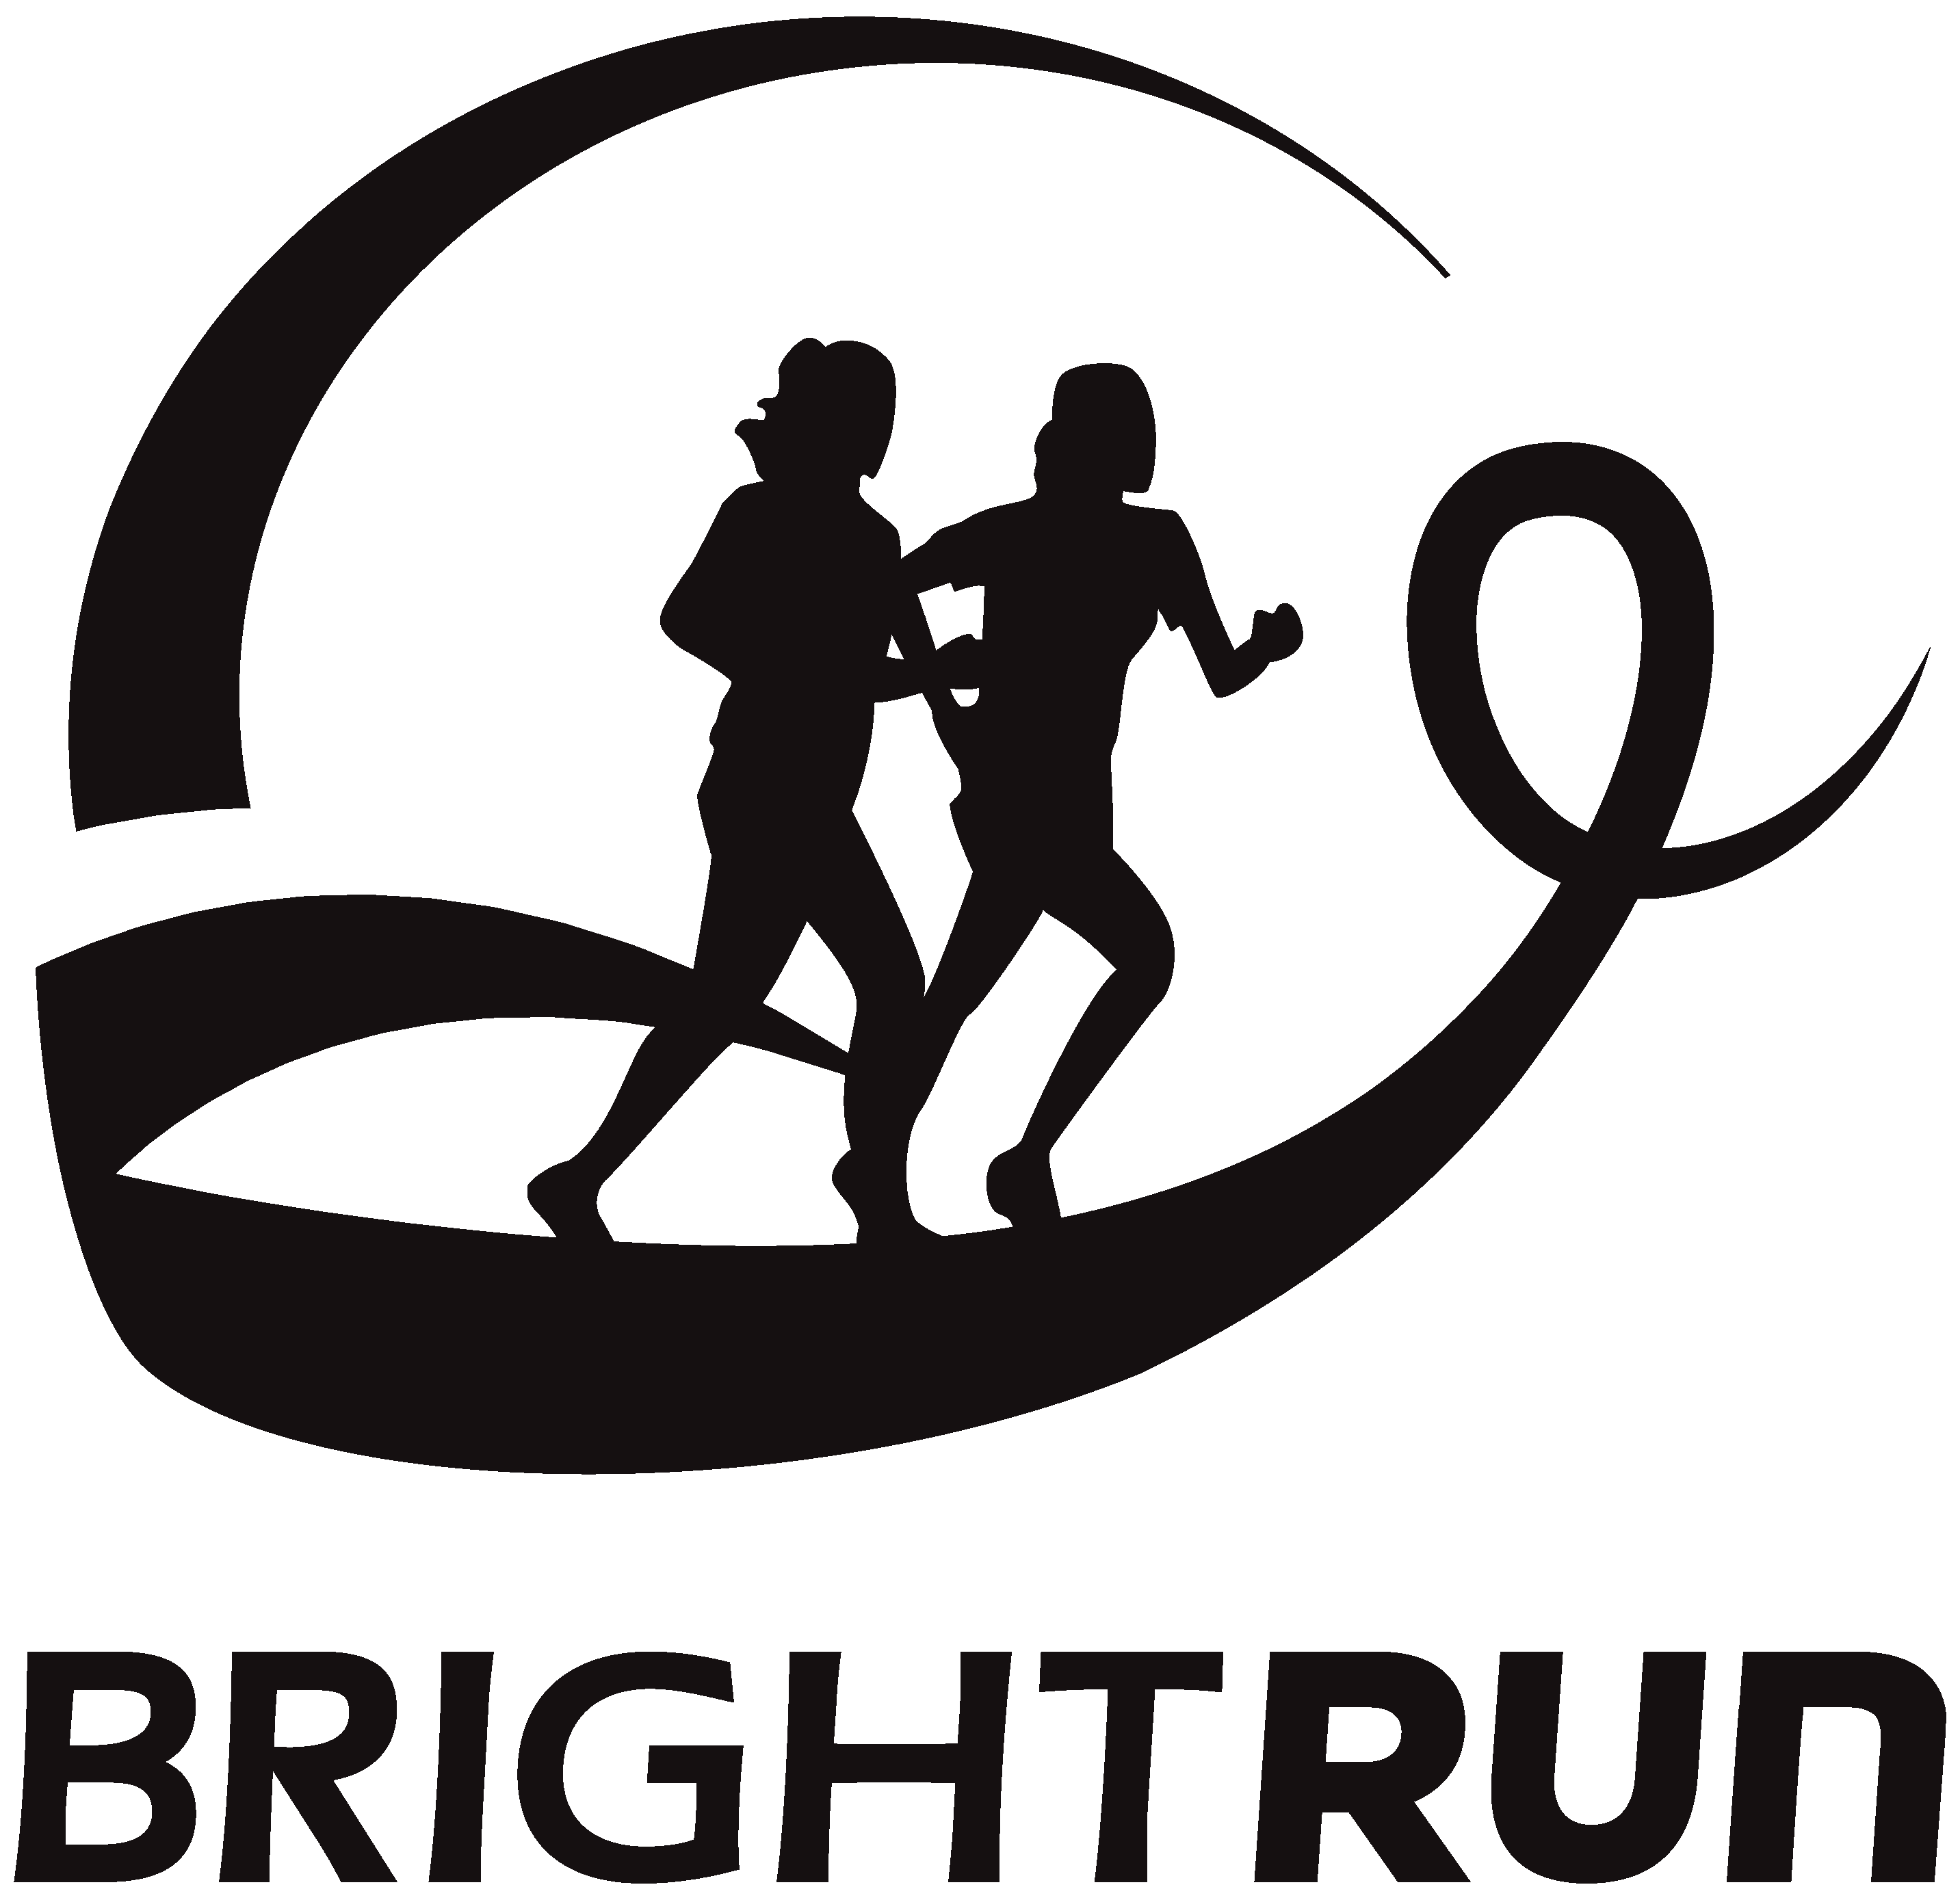 BRIGHT Run logo in greyscale